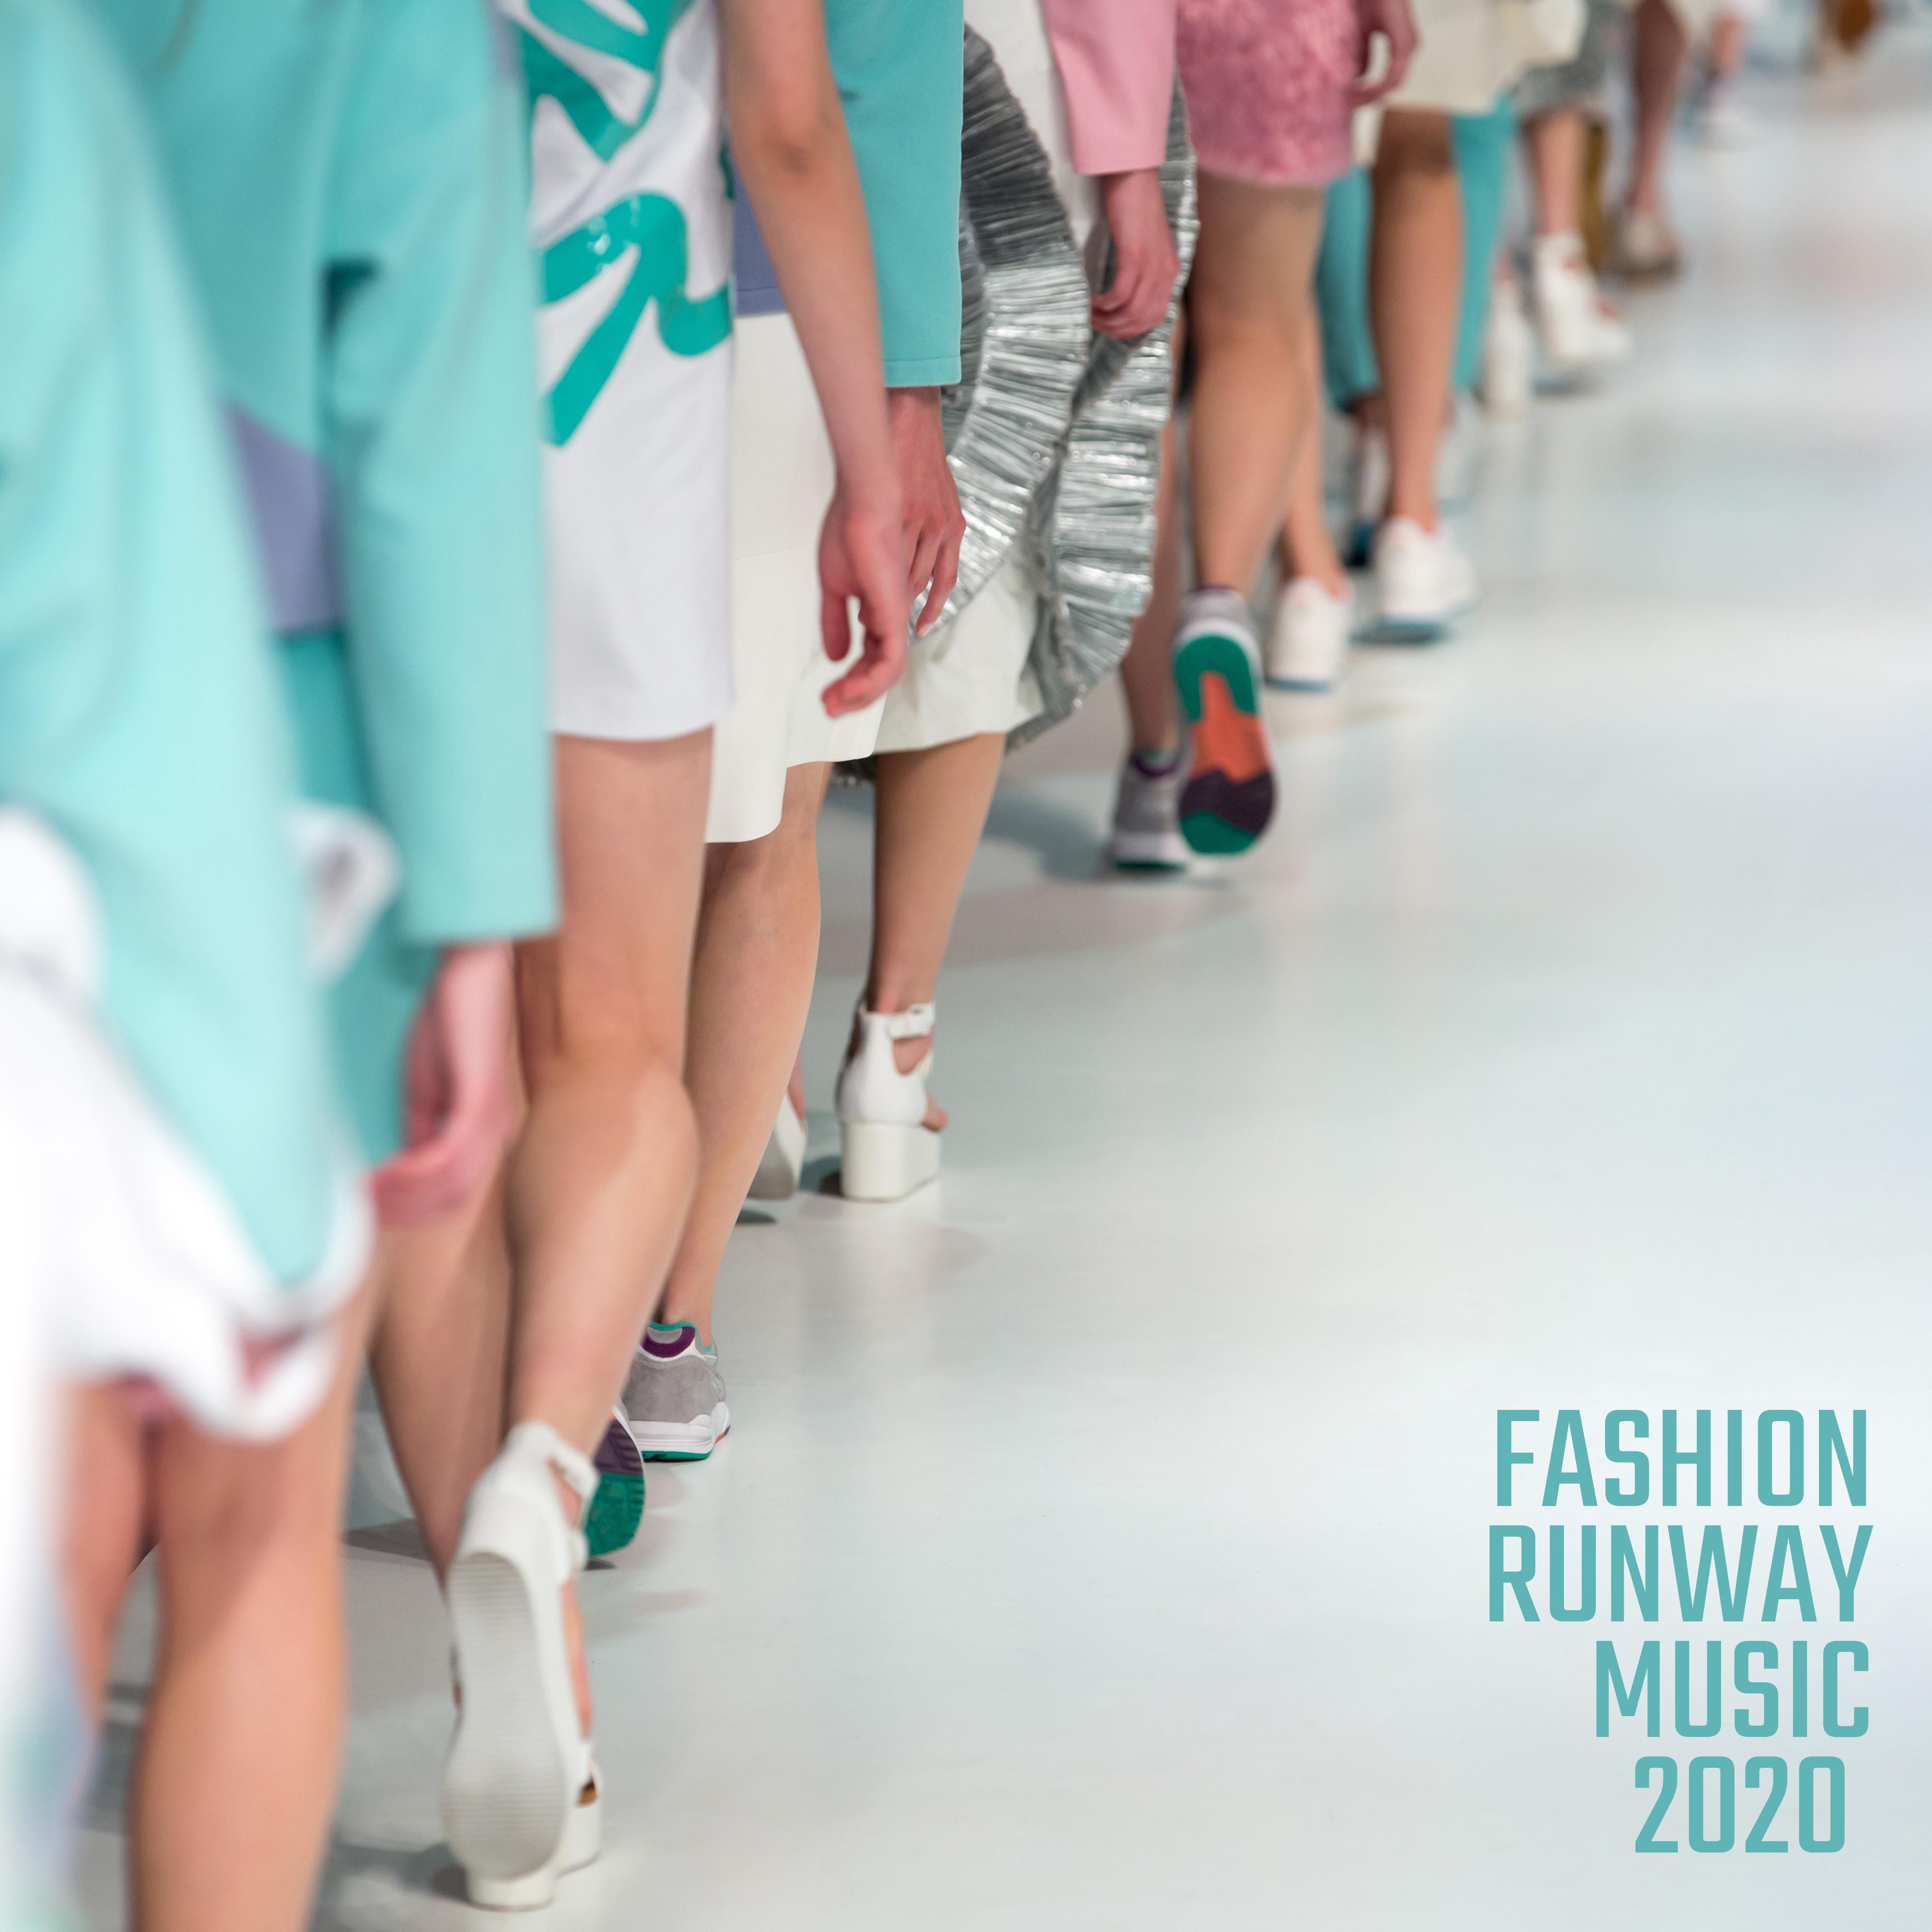 Fashion Runway Music 2020 – New Chillout for Fashion Week, Fresh Music, Fashion Beats, Lounge Music